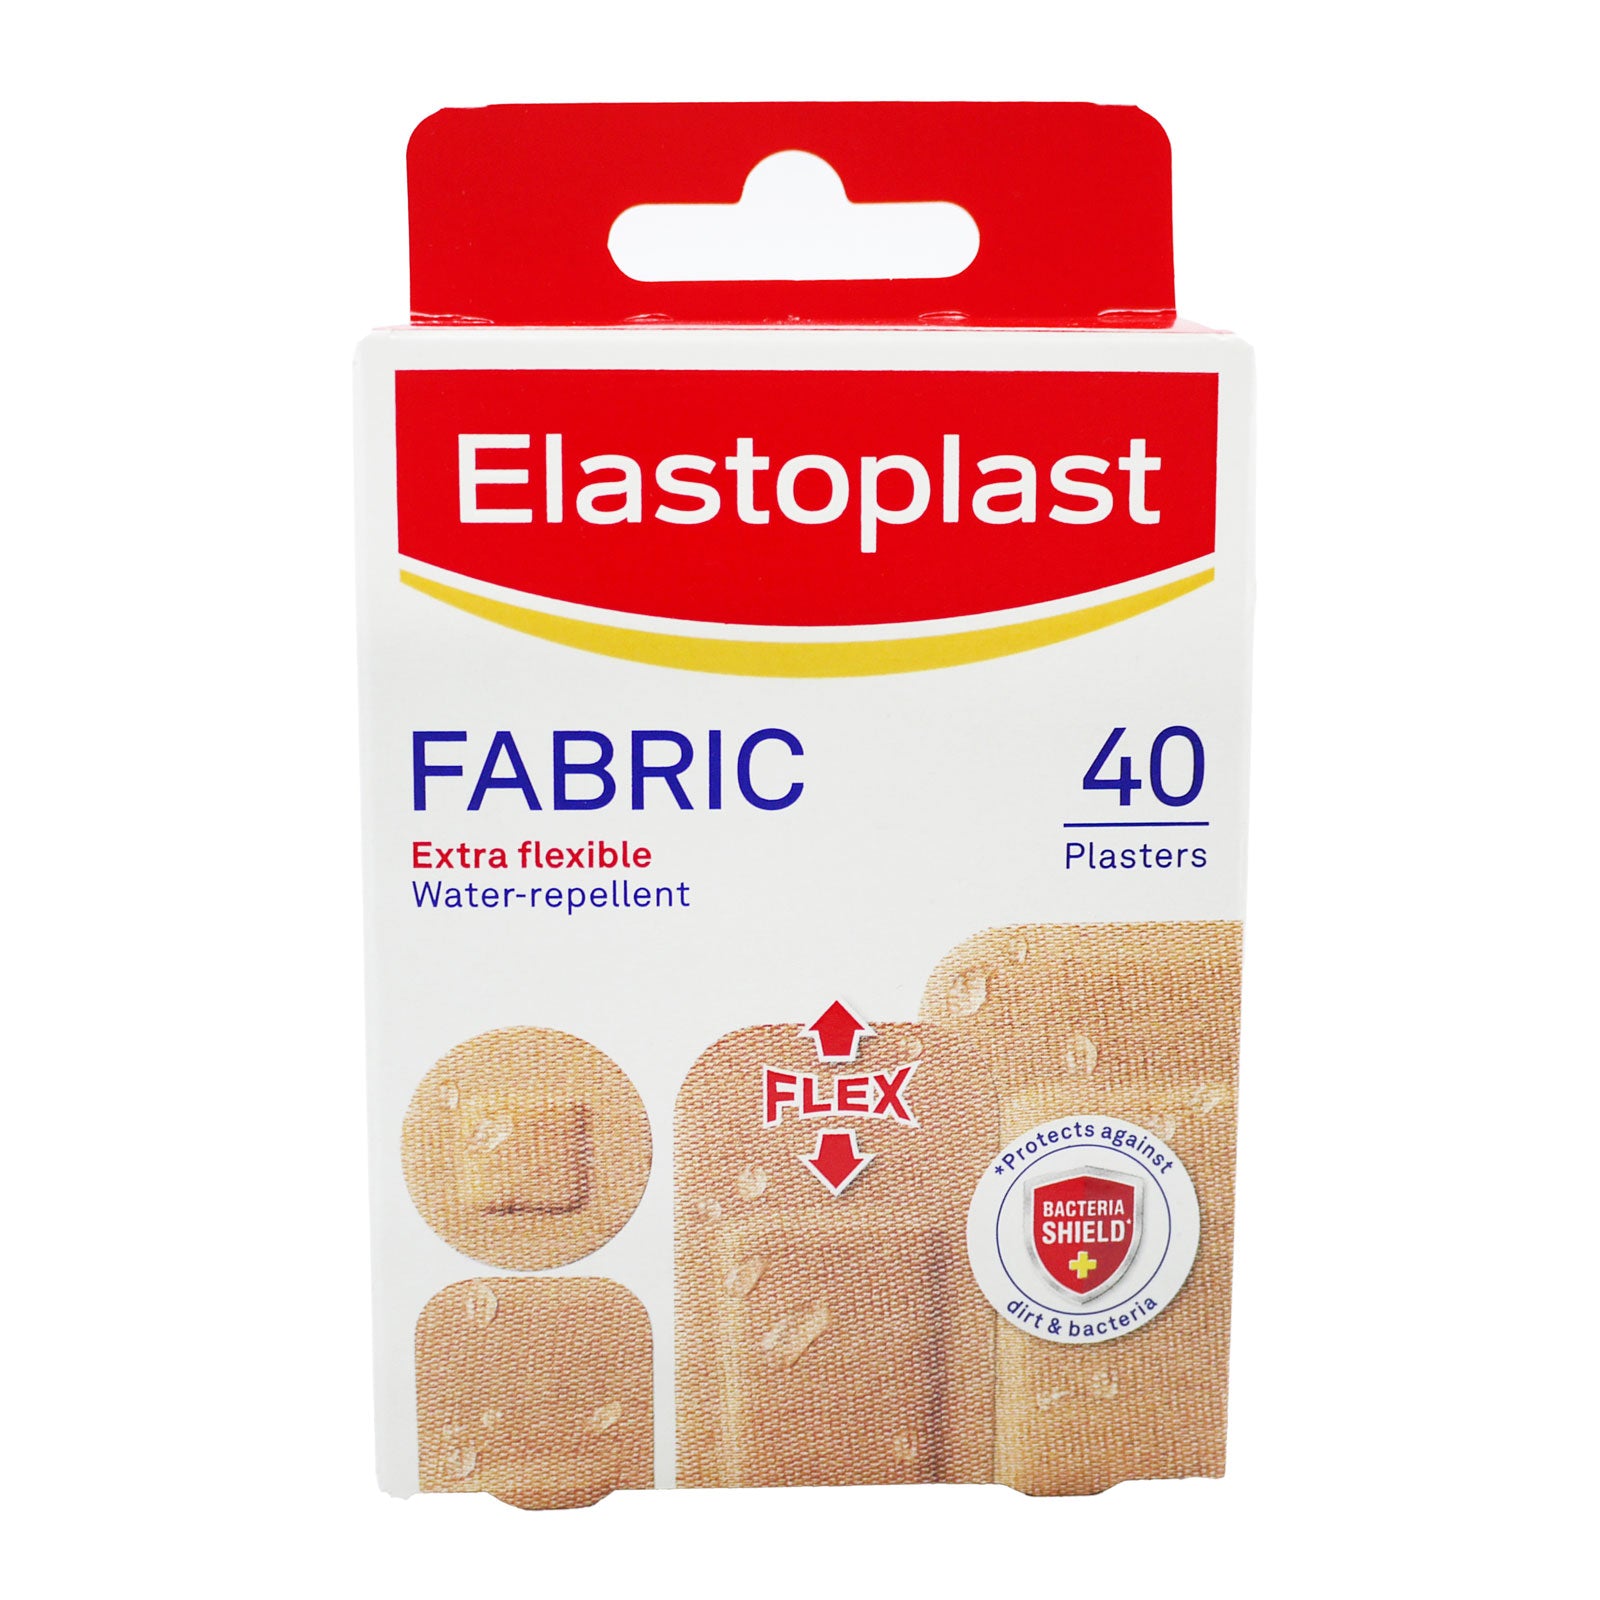 Elastoplast Fabric Extra Flexible 40 Plasters